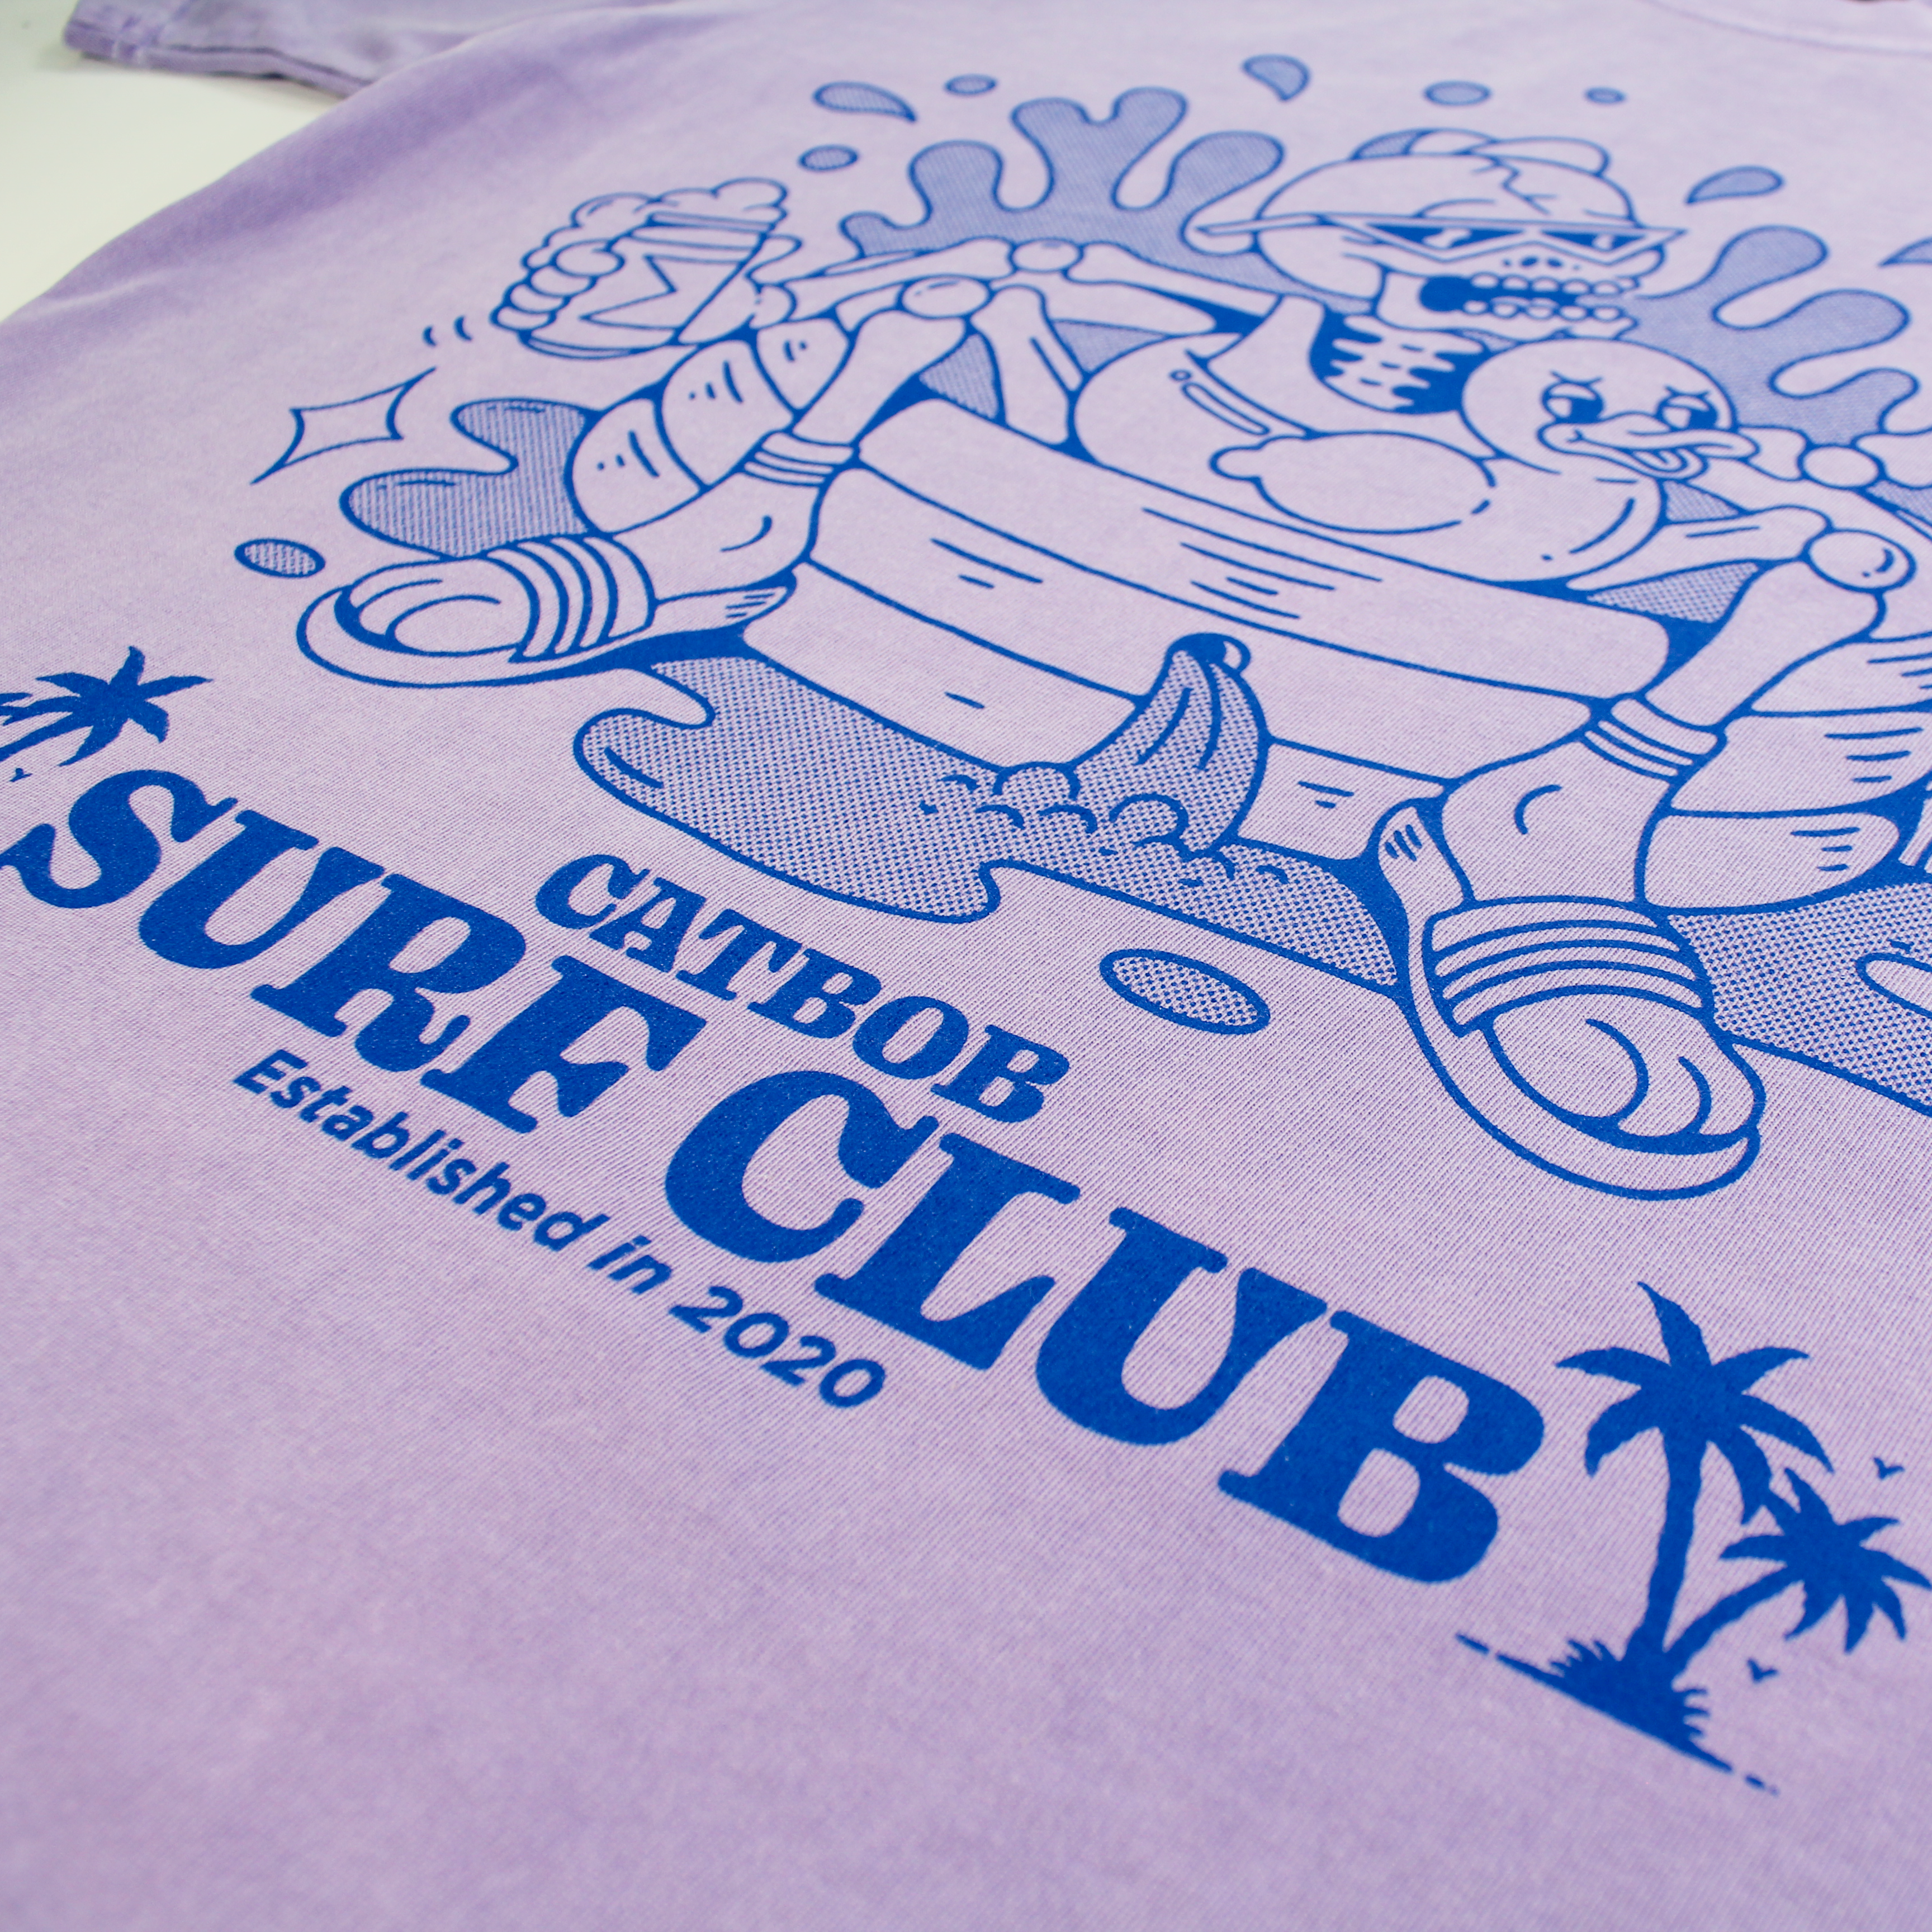 Catbob Surf Club: Duck Diver Tee